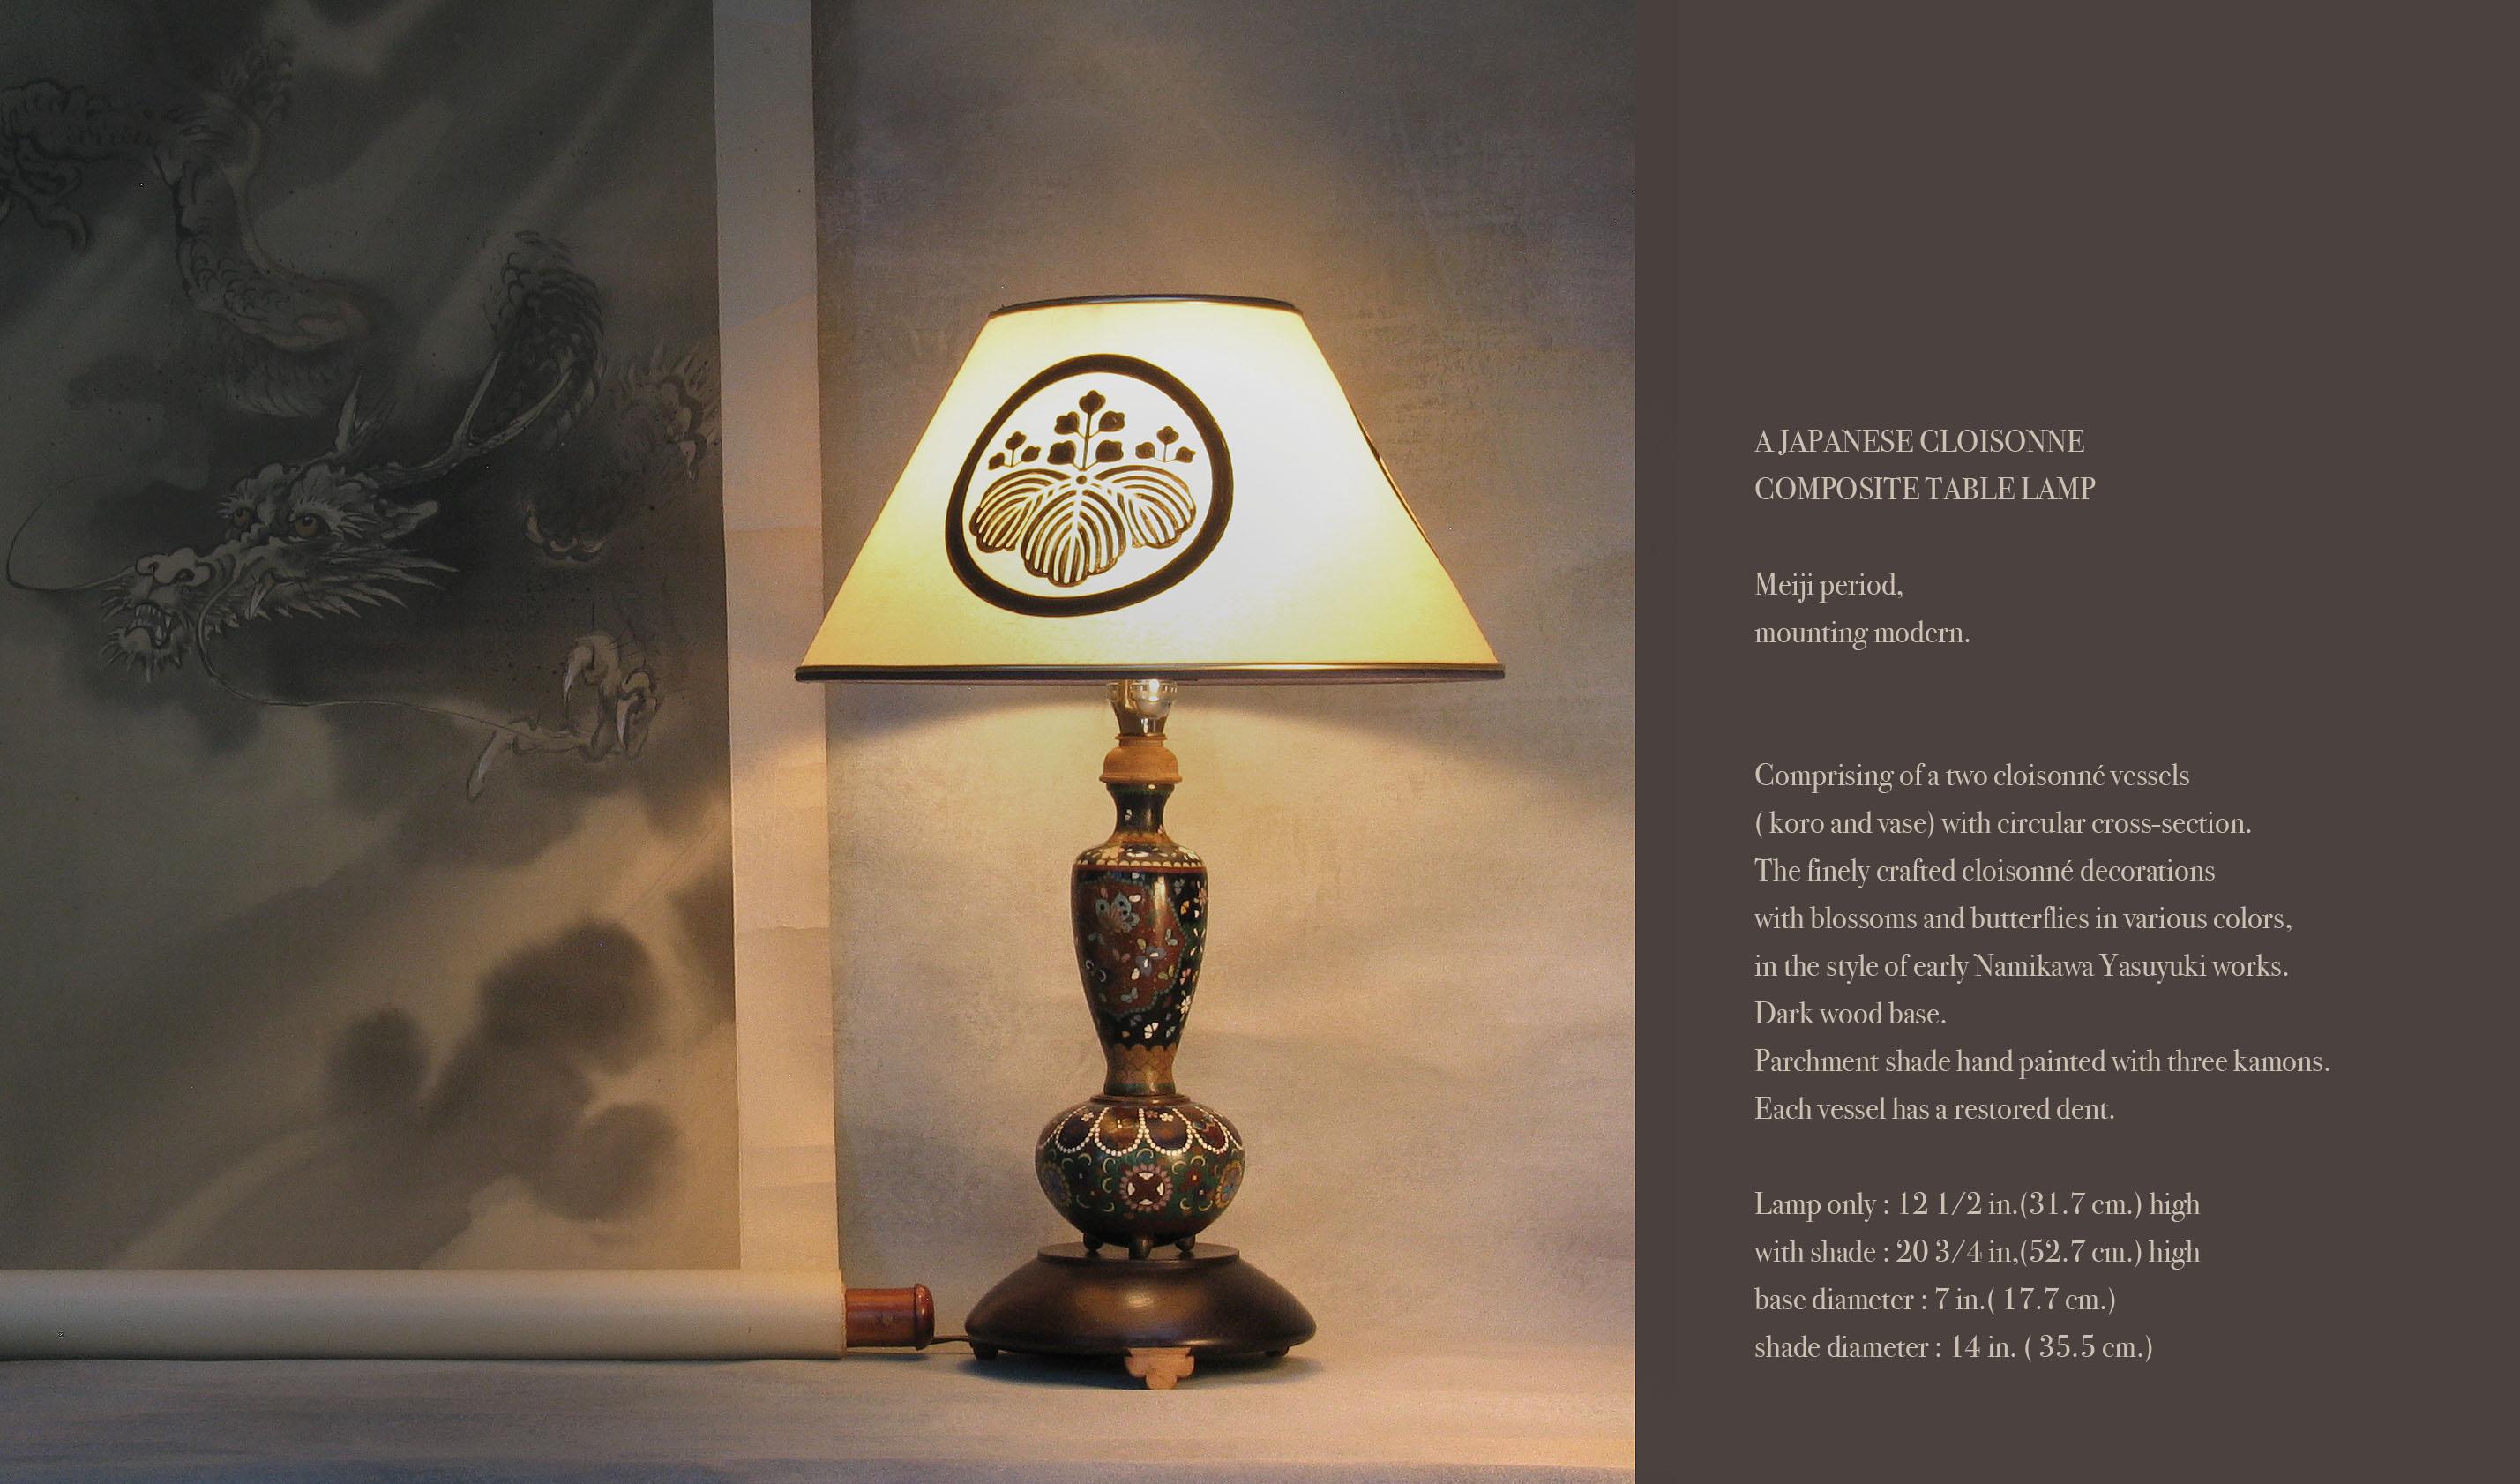 Enamel Japanese Cloisonne Composite Table Lamp Meiji Period